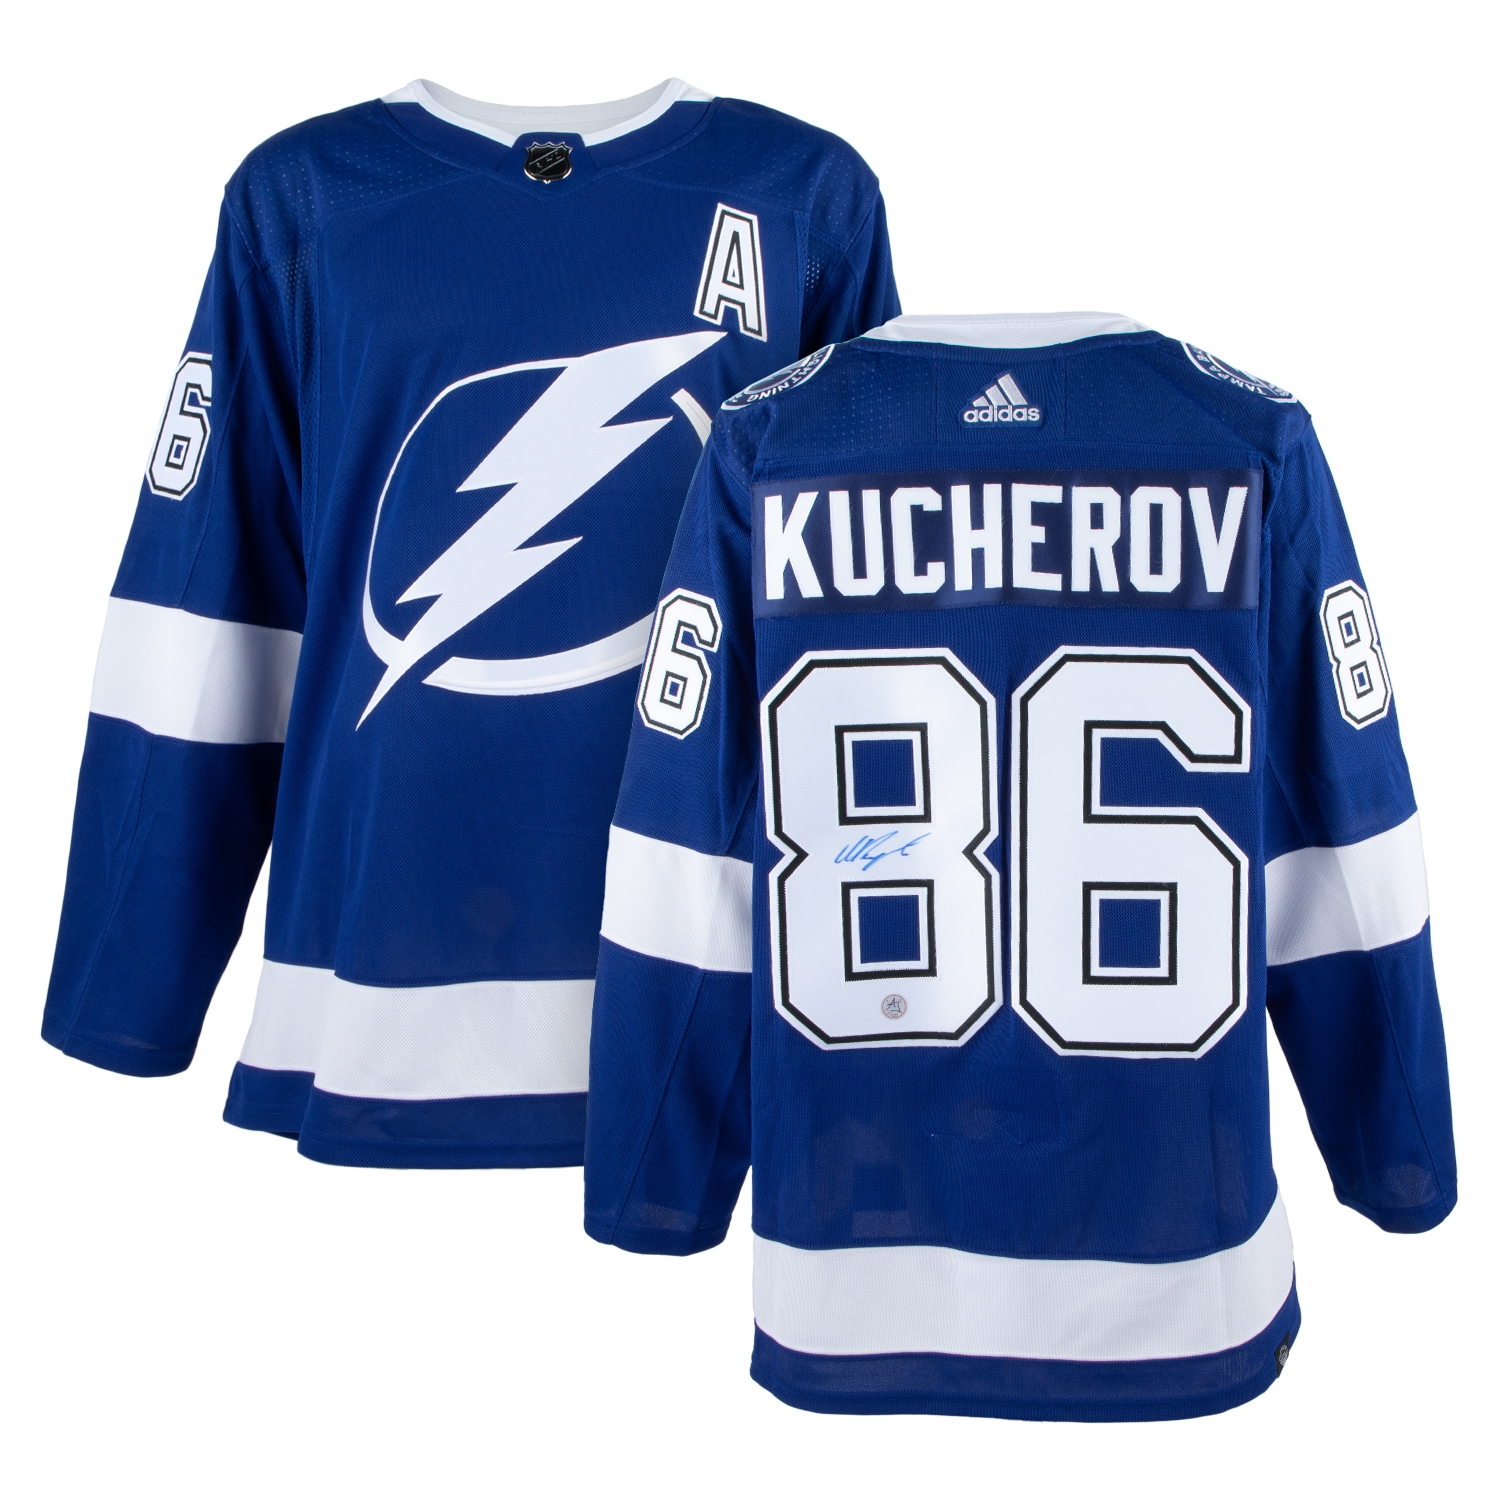 Nikita Kucherov Tampa Bay Lightning Autographed adidas Jersey